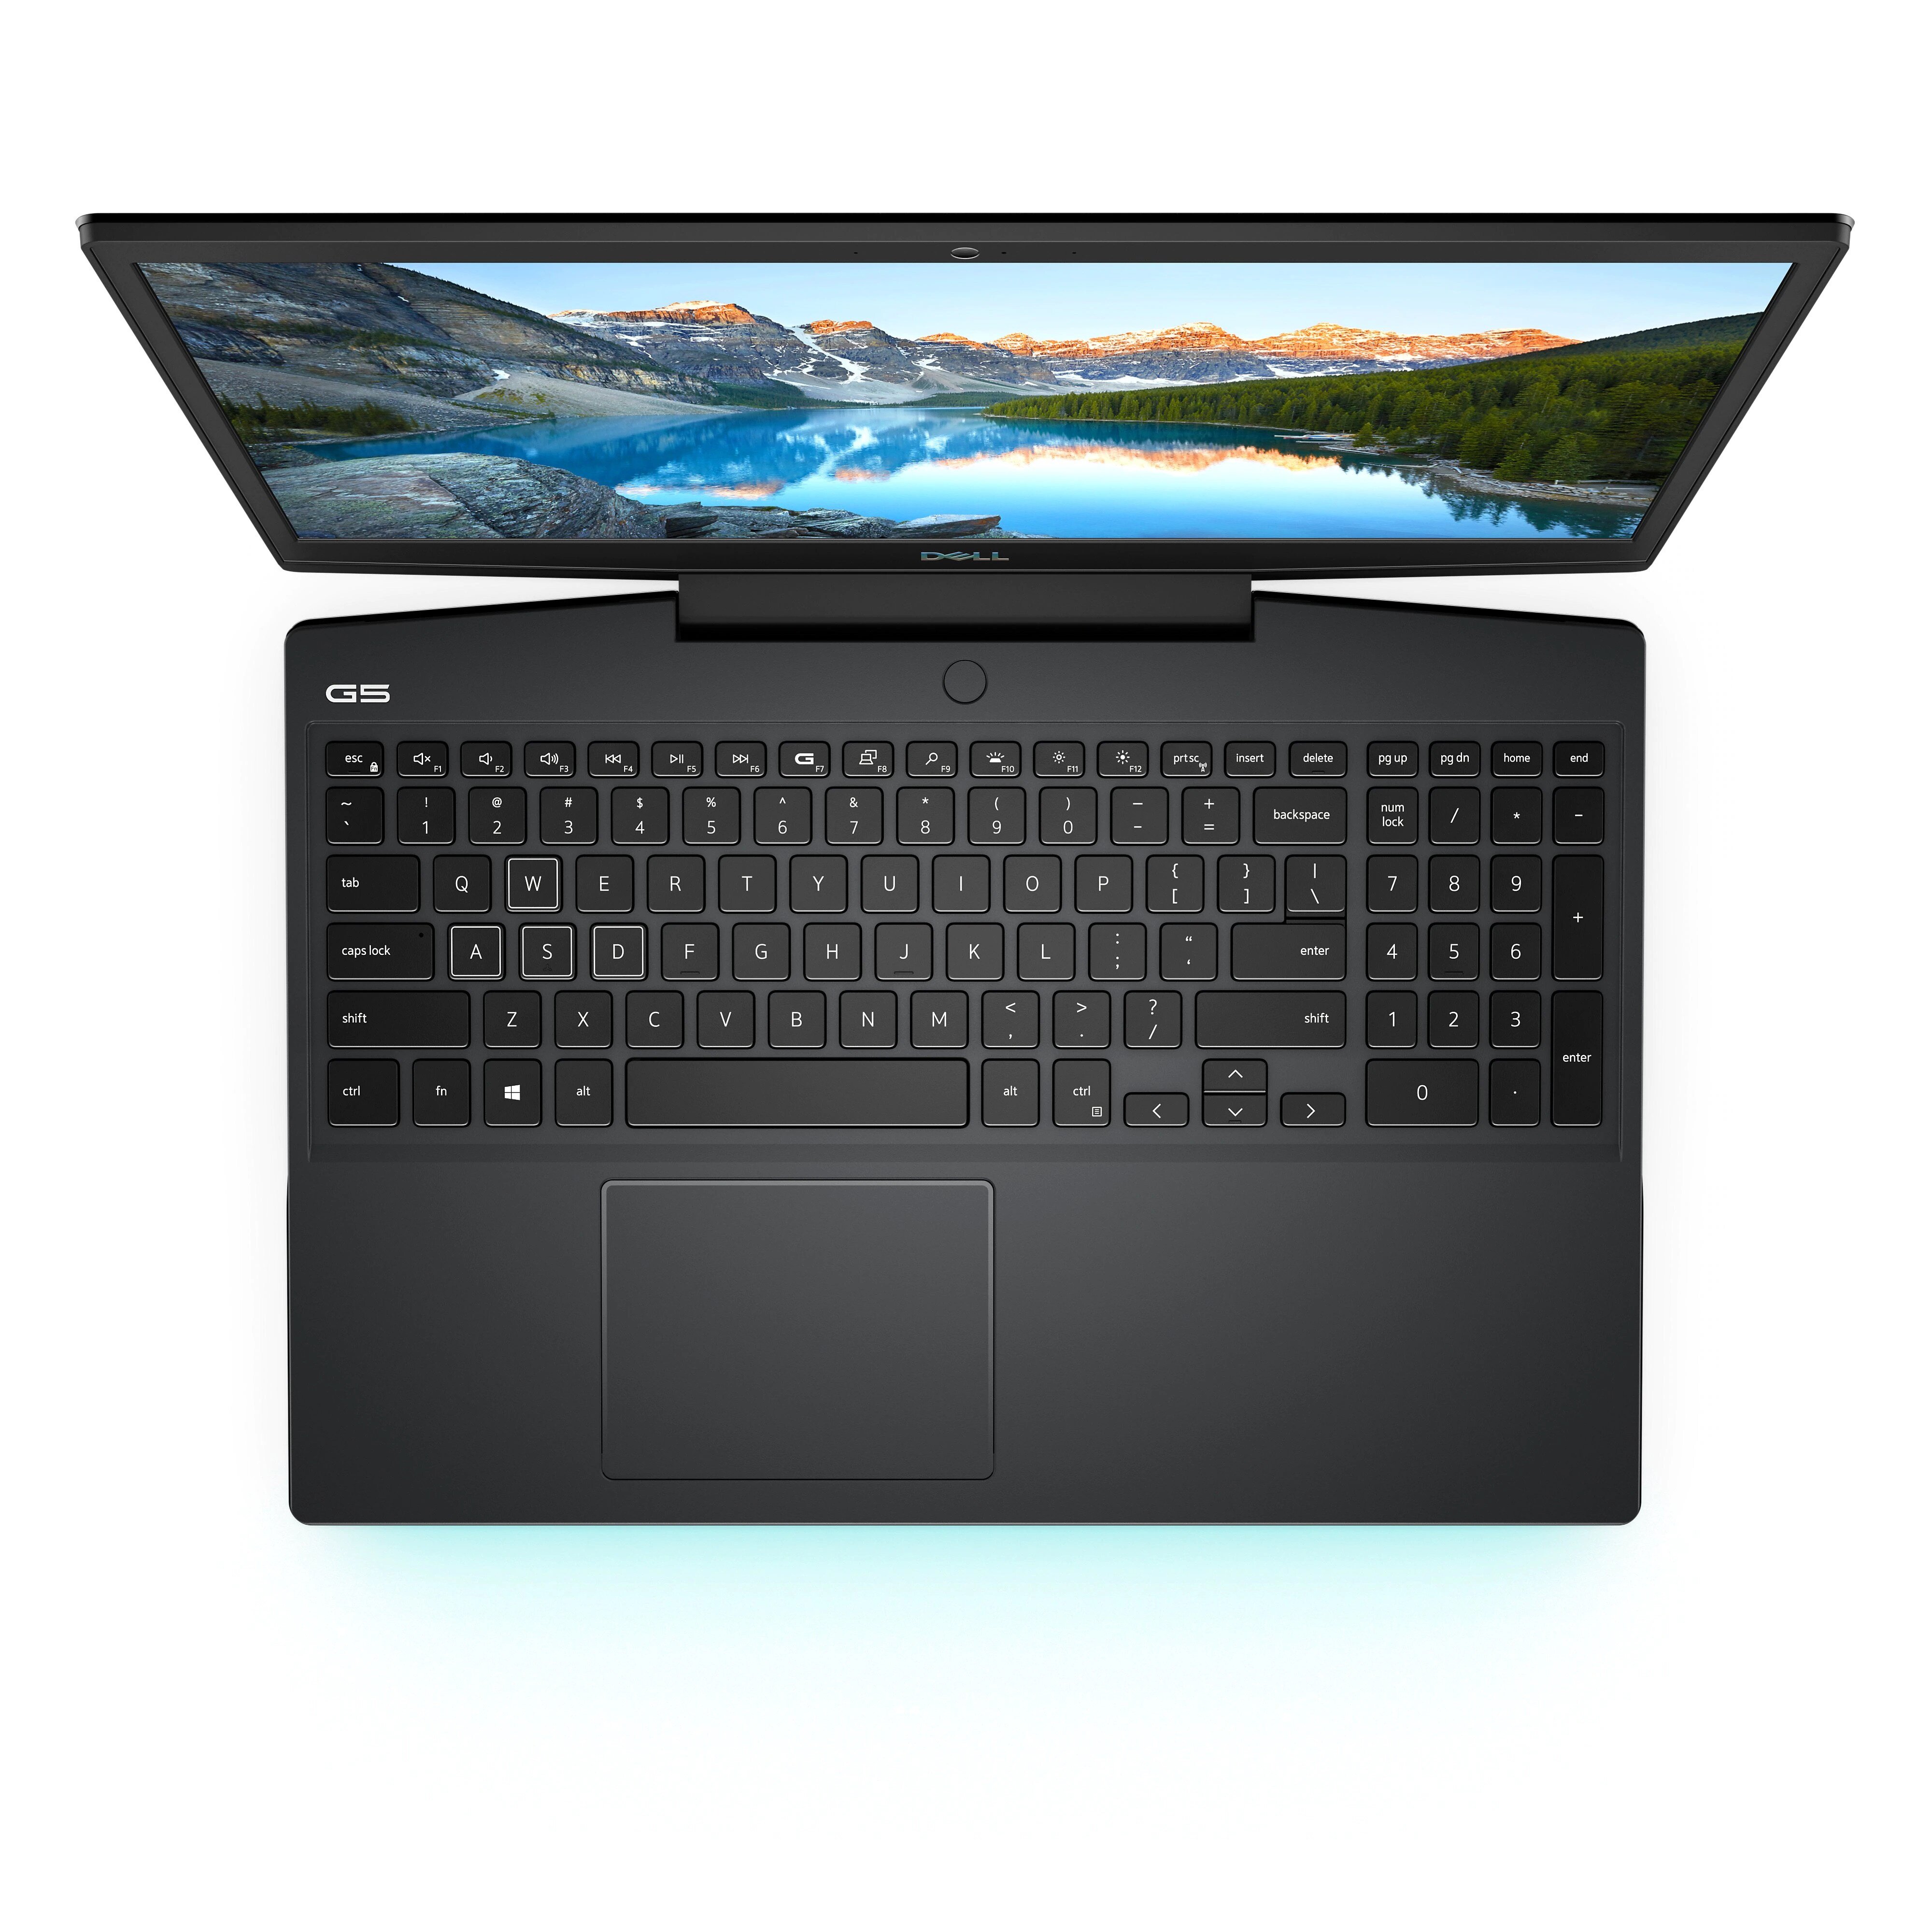 Buy Dell G5 15 5500 Gaming Laptop online in Pakistan - Tejar.pk